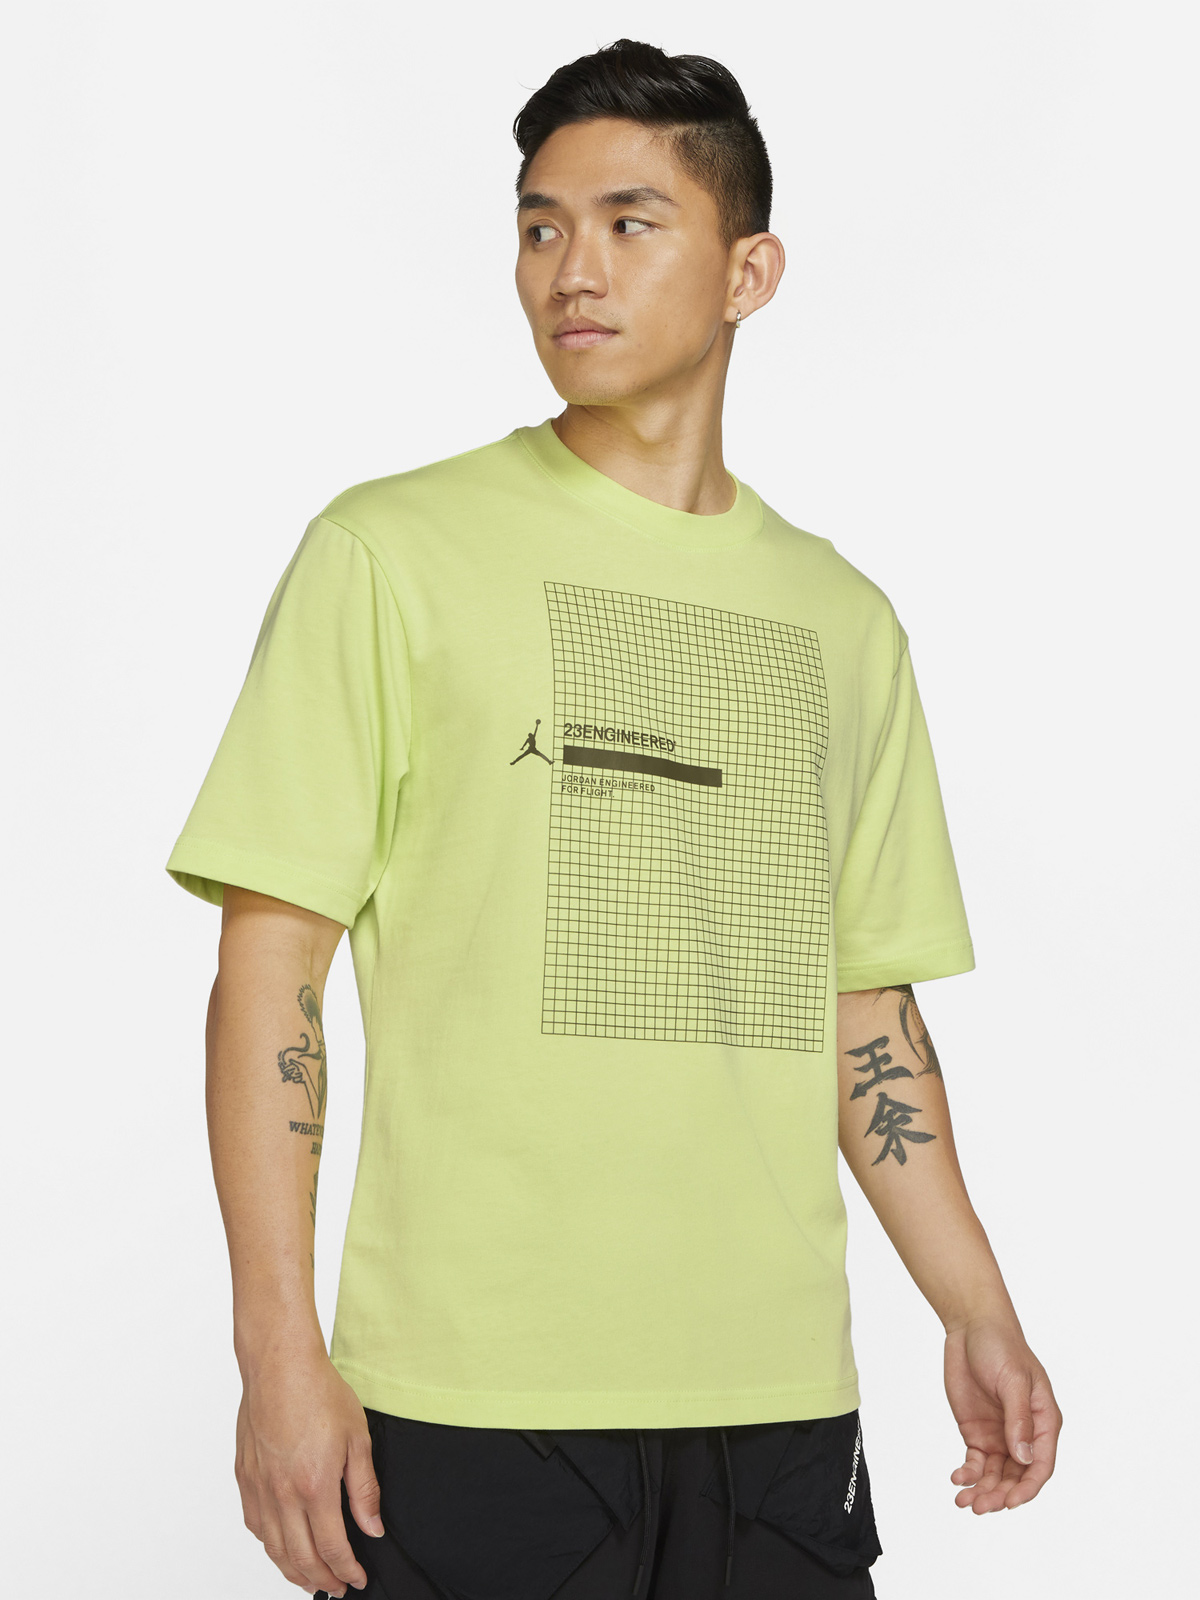 jordan-23-engineered-lime-green-shirt